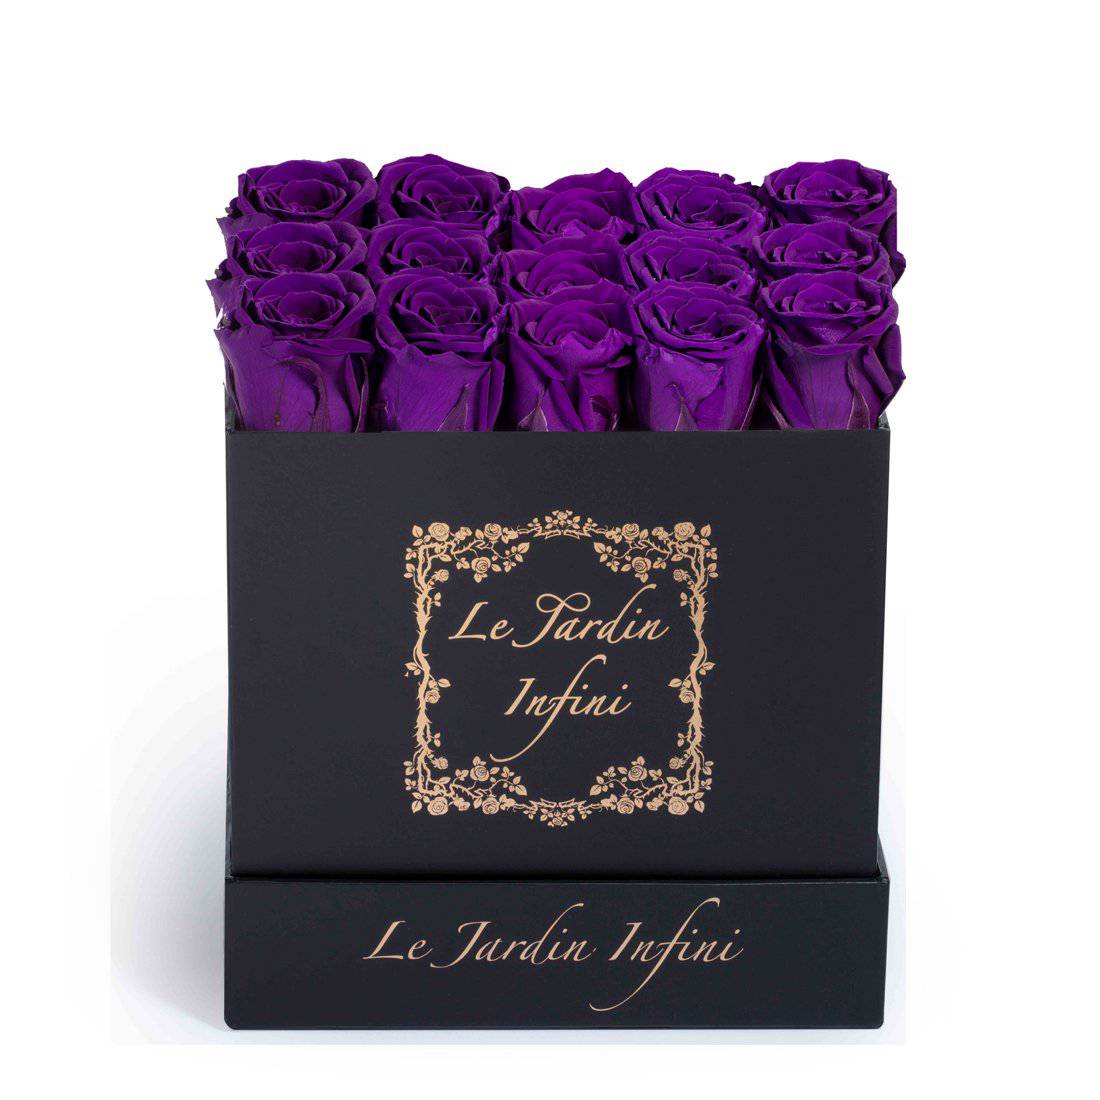 Vibrant Purple Preserved Roses - Medium Square Black Box - Le Jardin Infini Roses in a Box